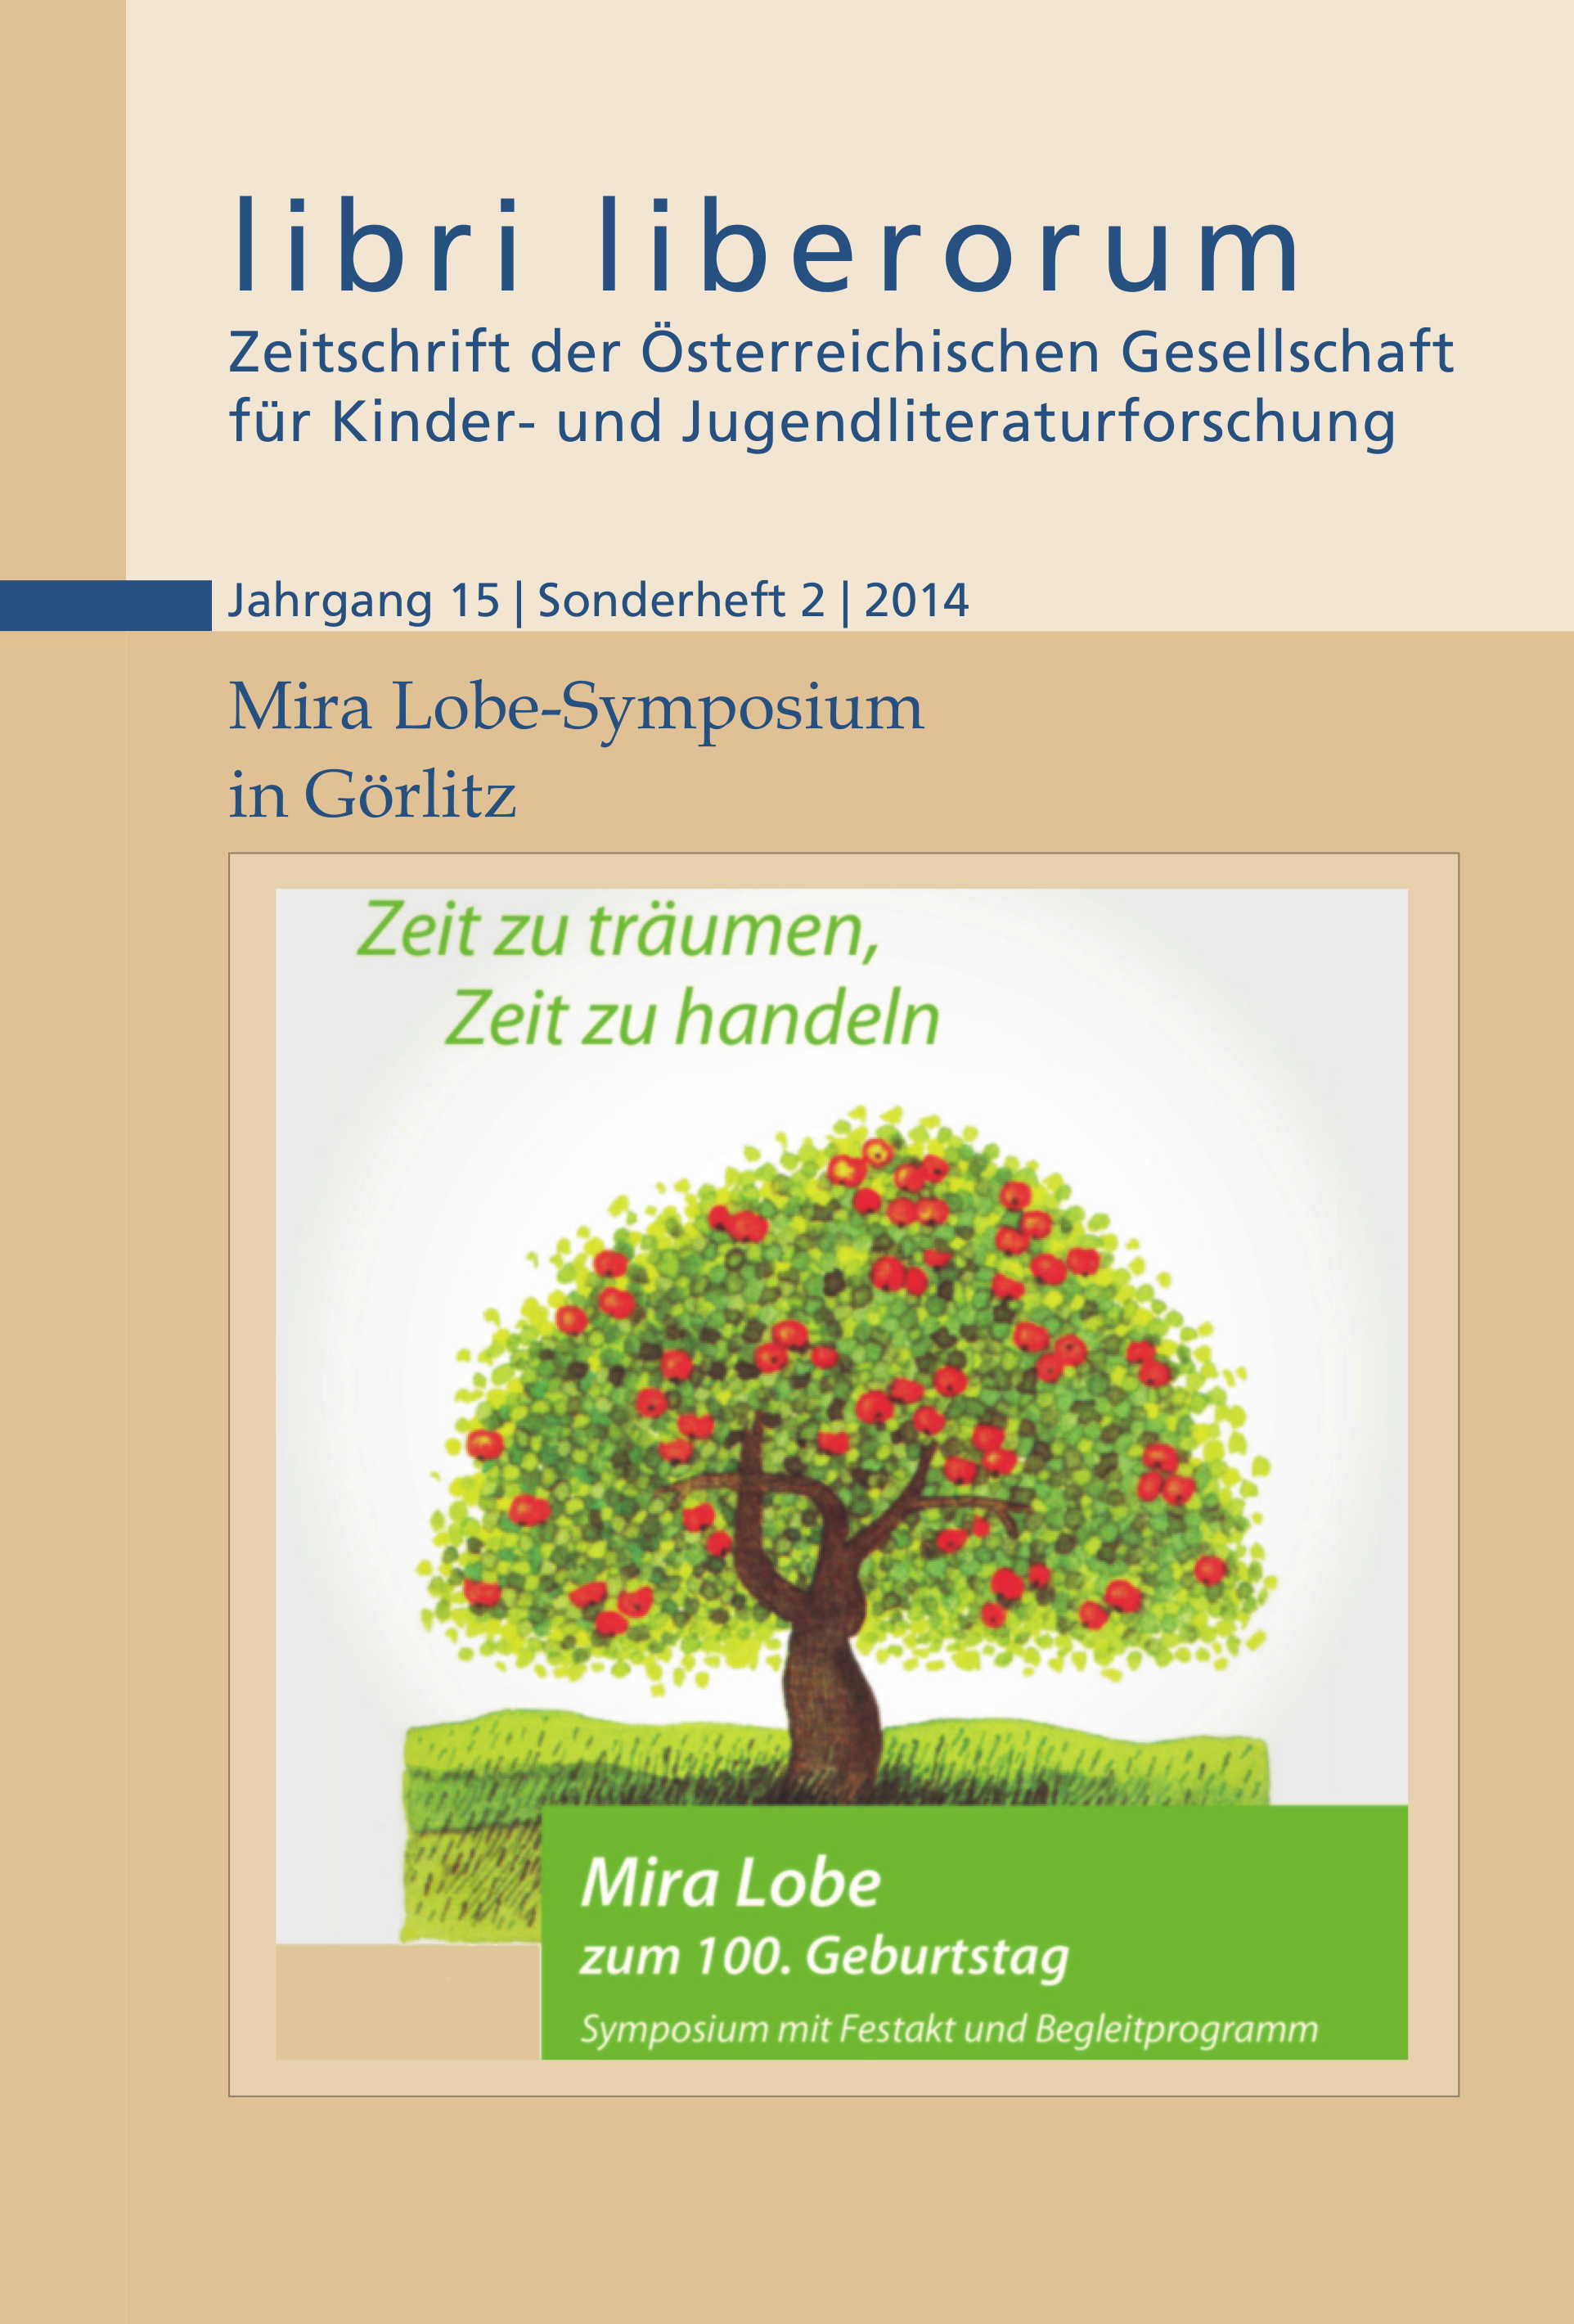 					Ansehen libri liberorum (Jahrgang 15/Sonderheft 2/2014)
				